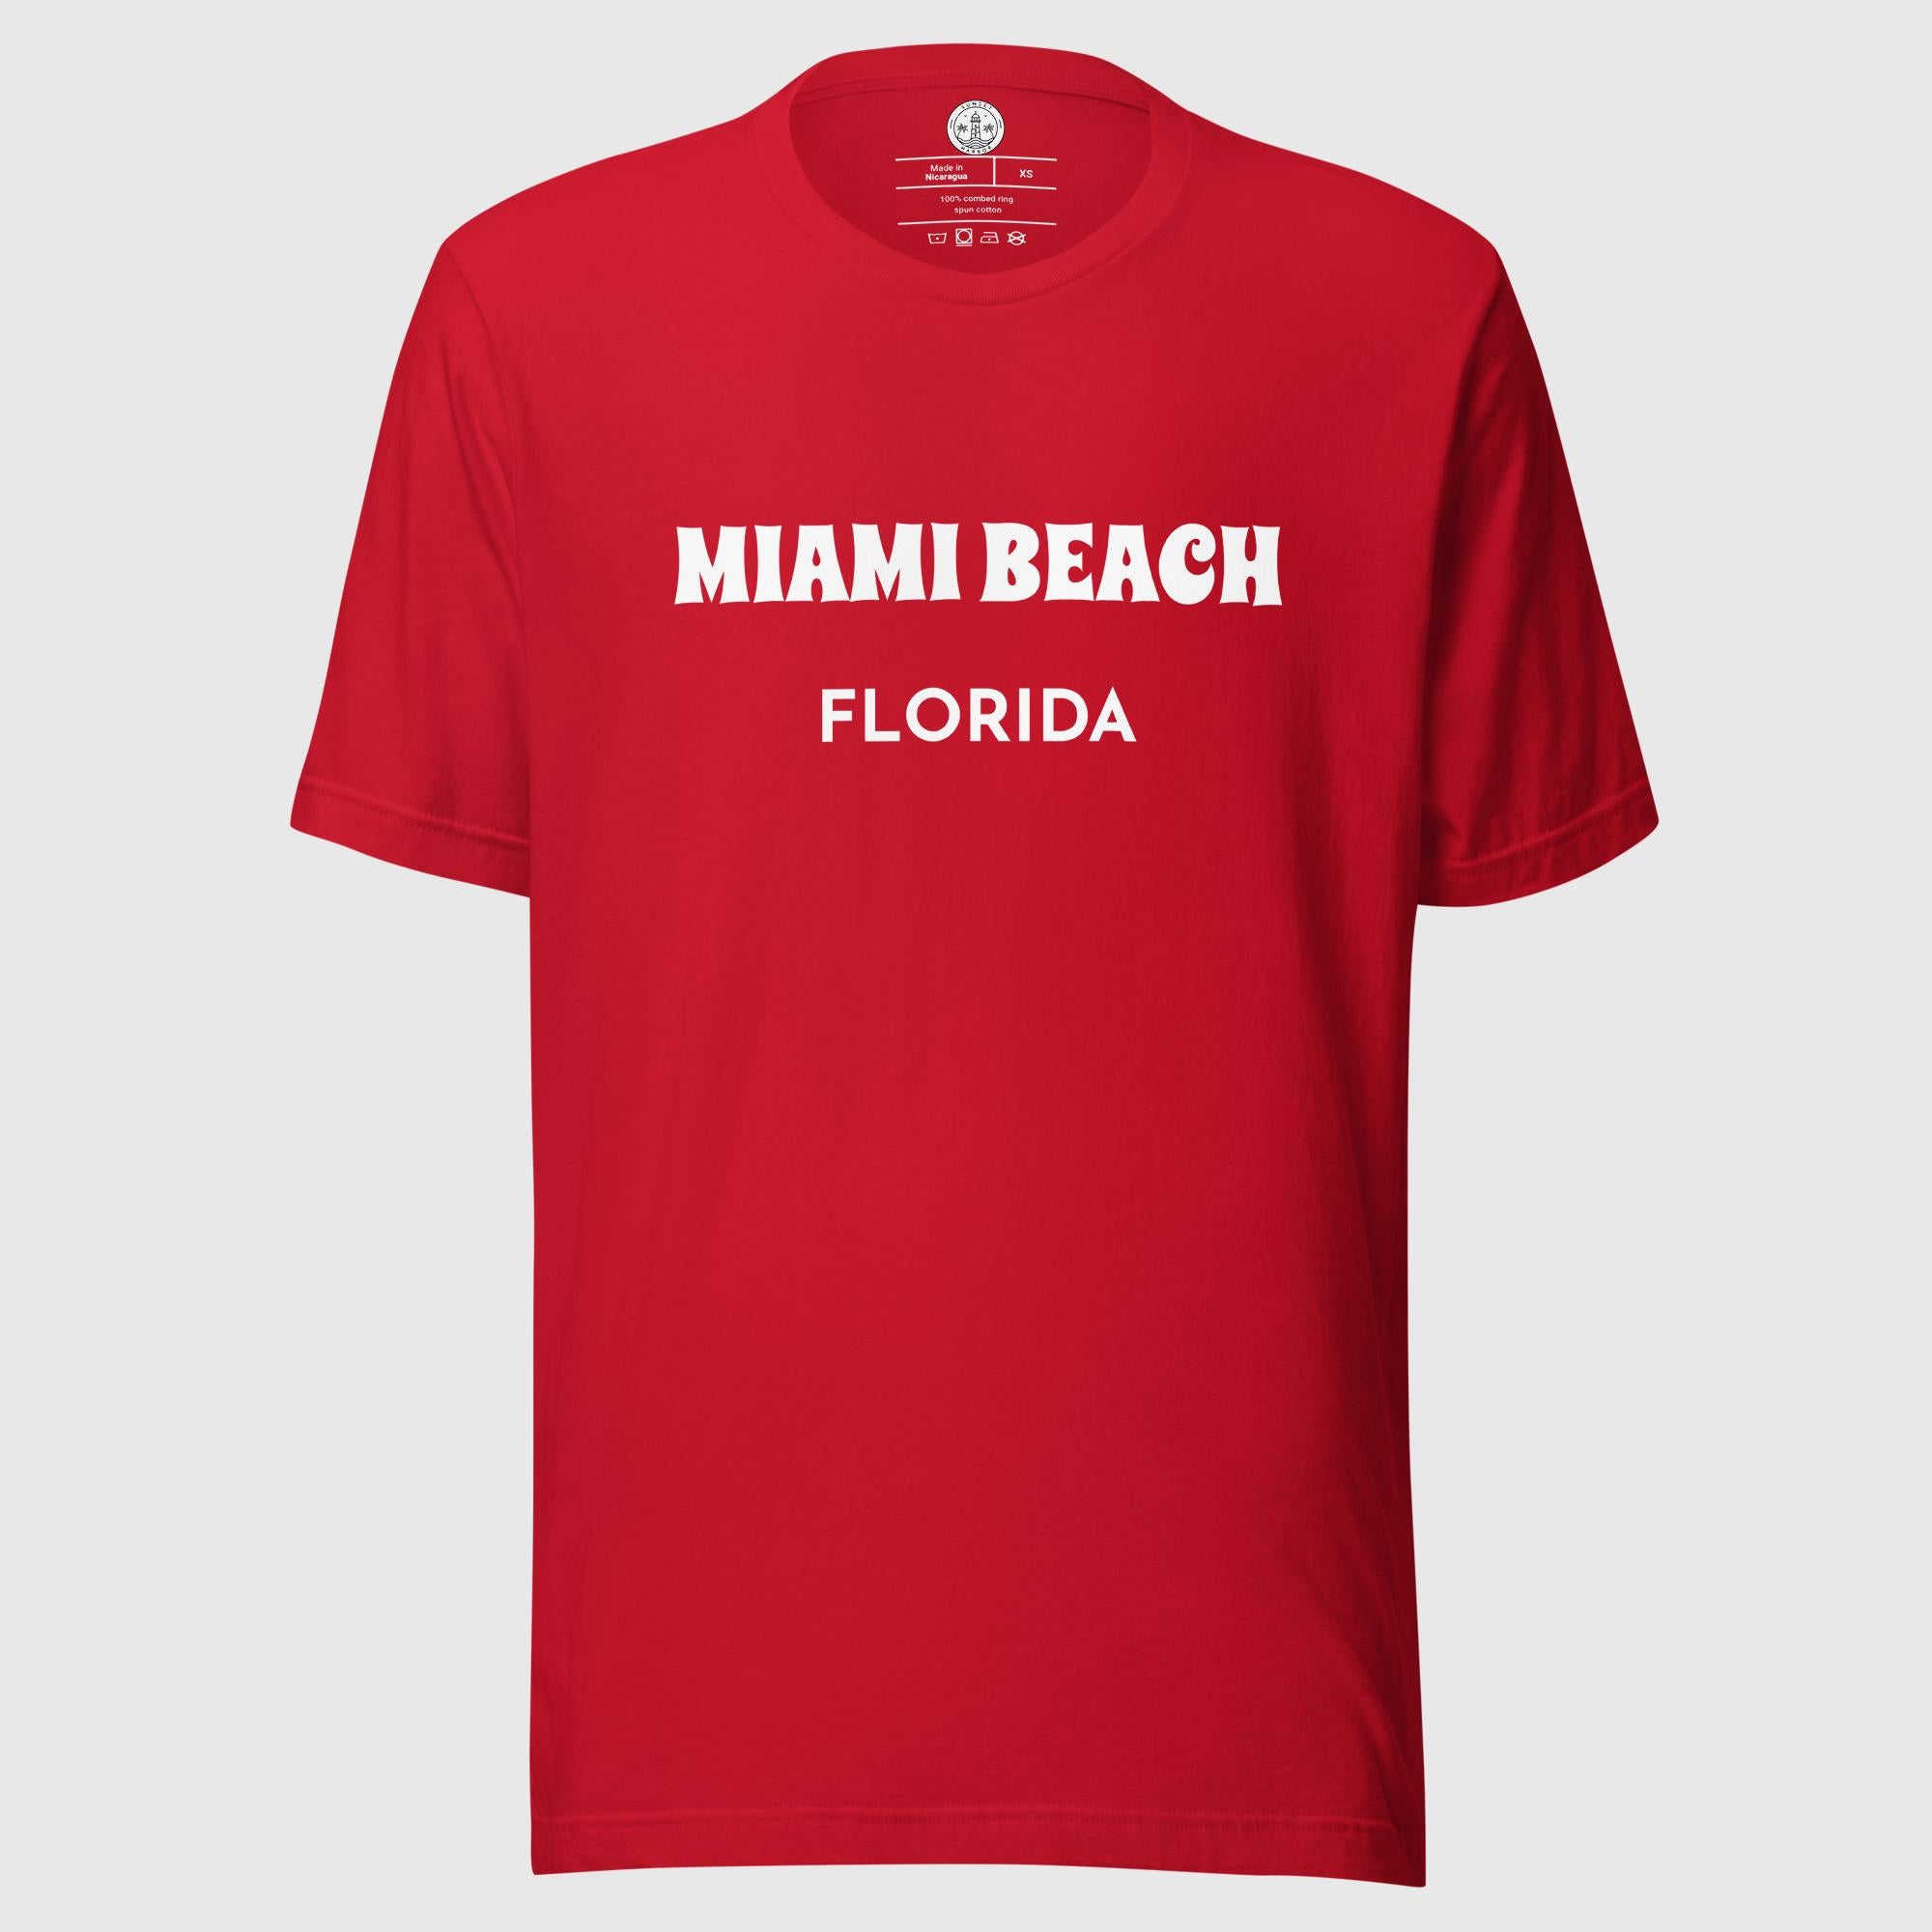 Unisex t-shirt - Miami Beach